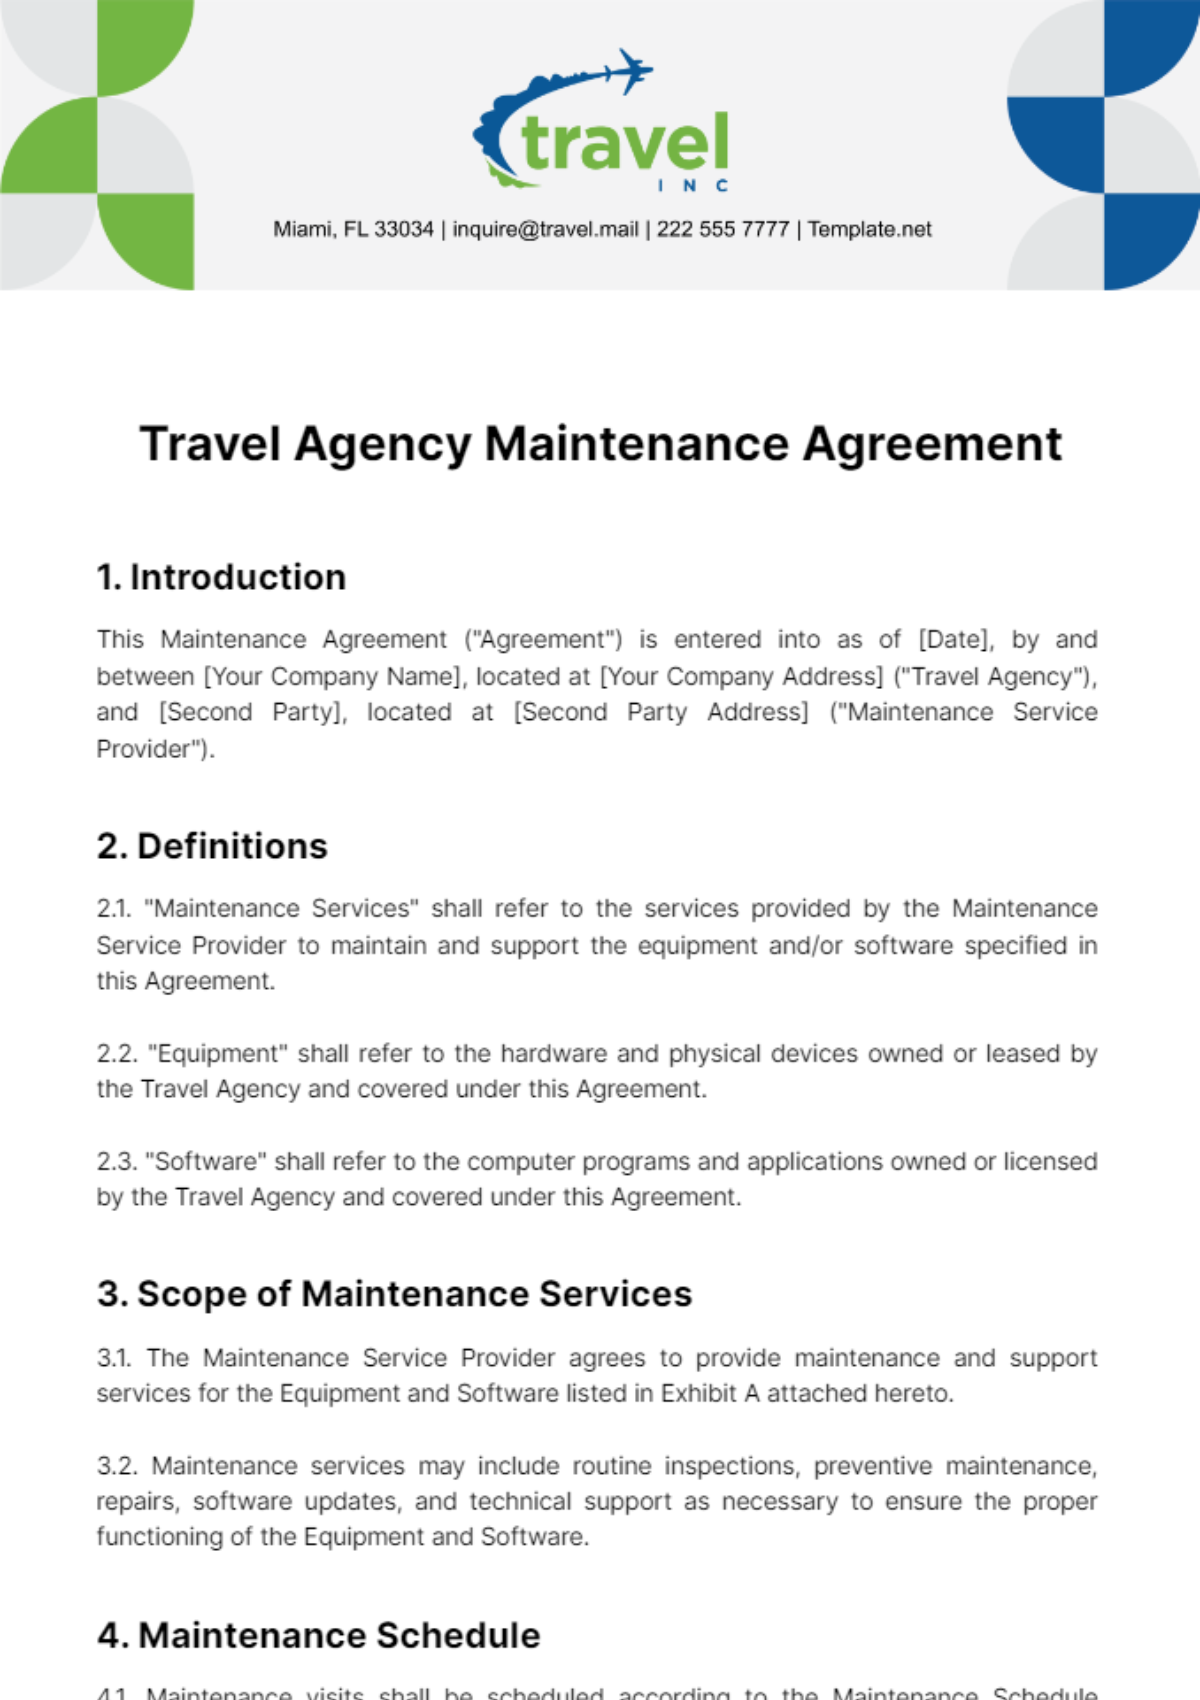 Travel Agency Maintenance Agreement Template